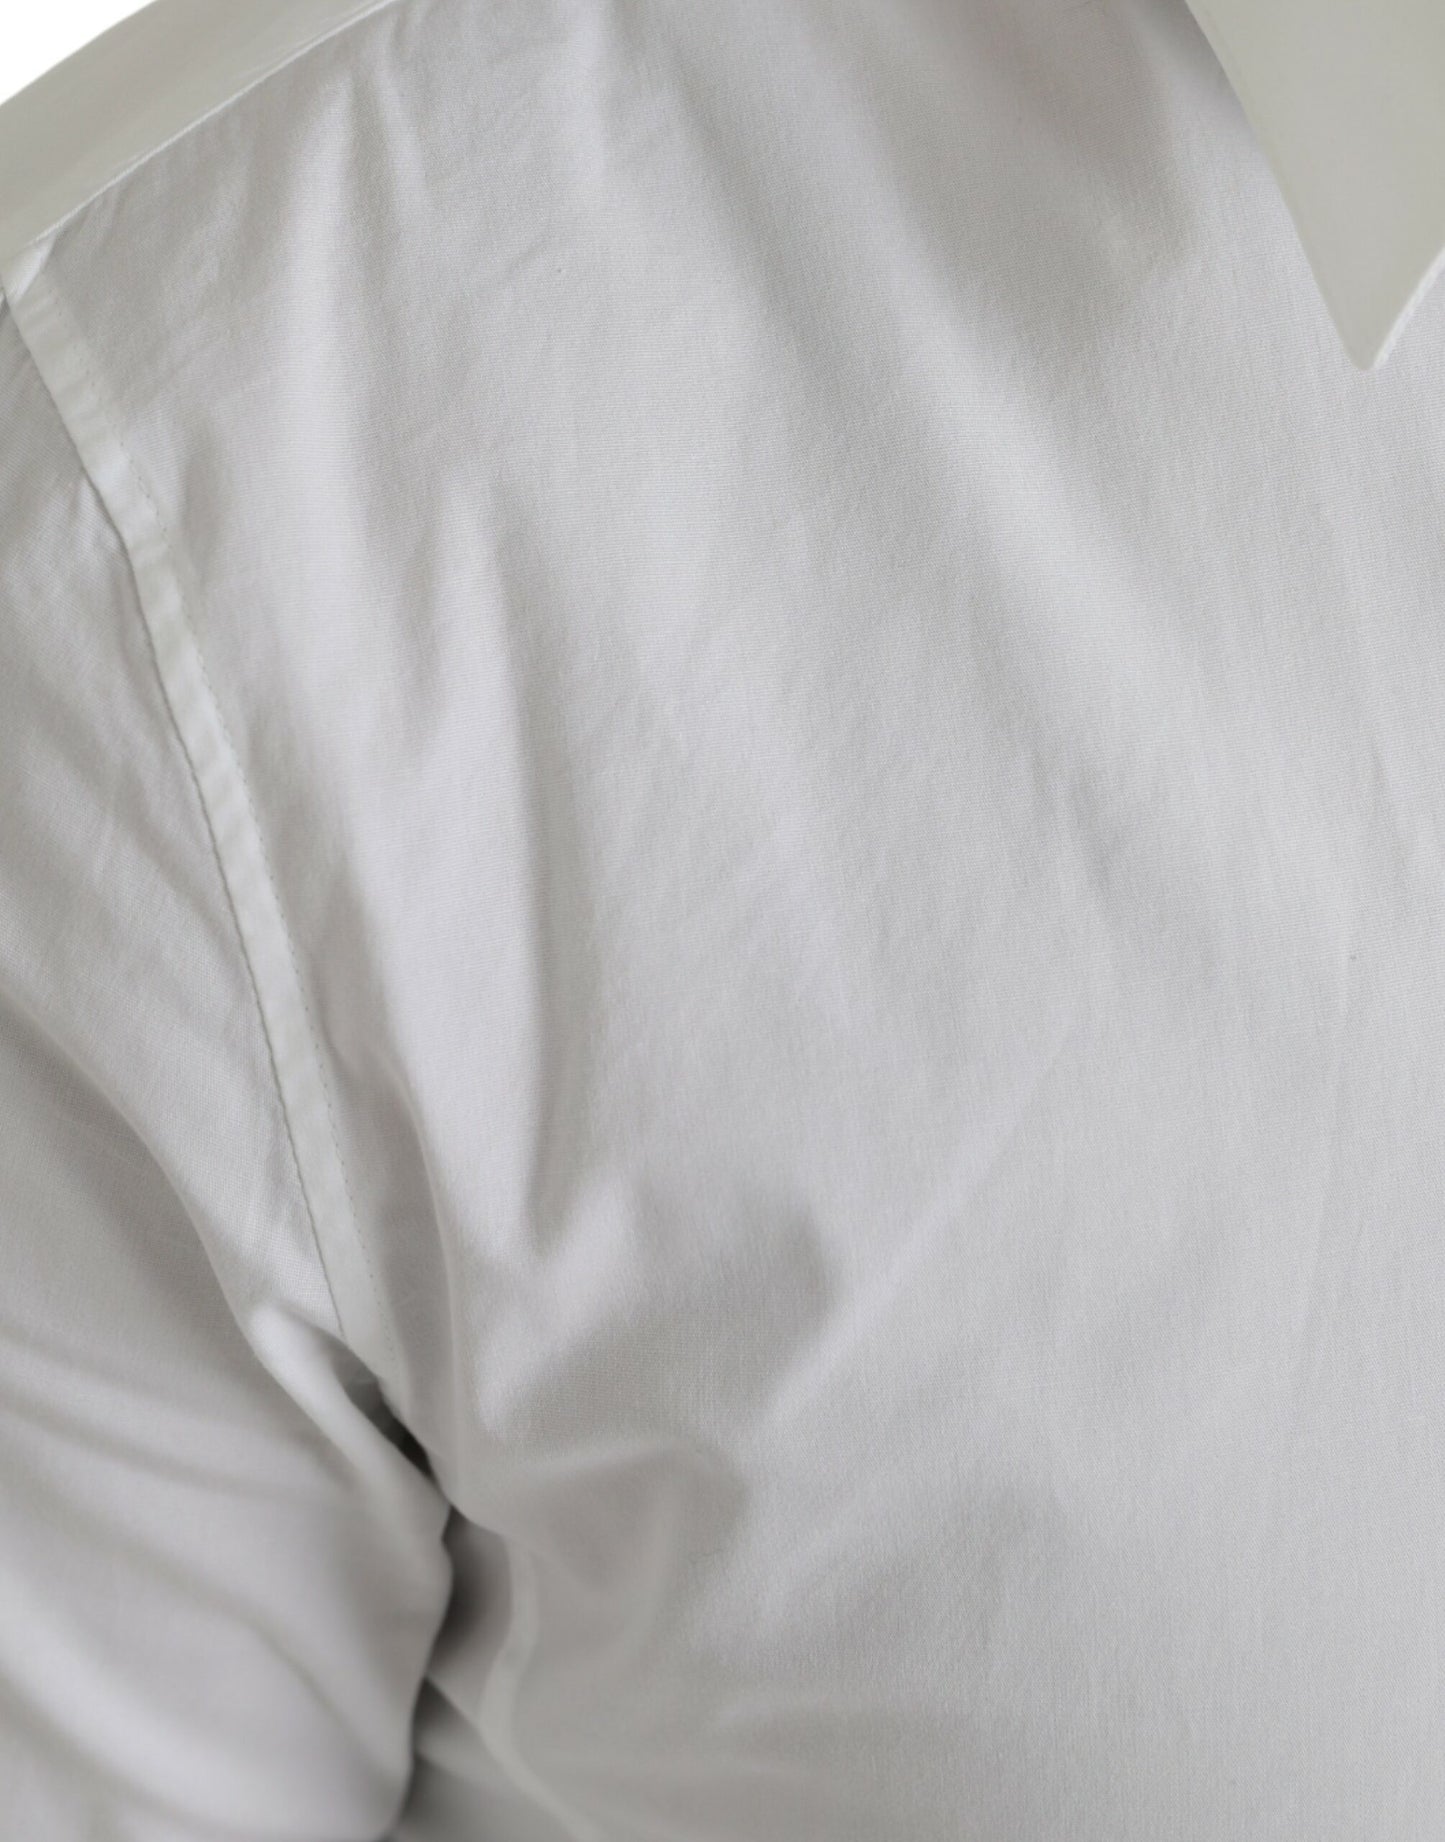 White Cotton Stretch Formal SICILIA Shirt